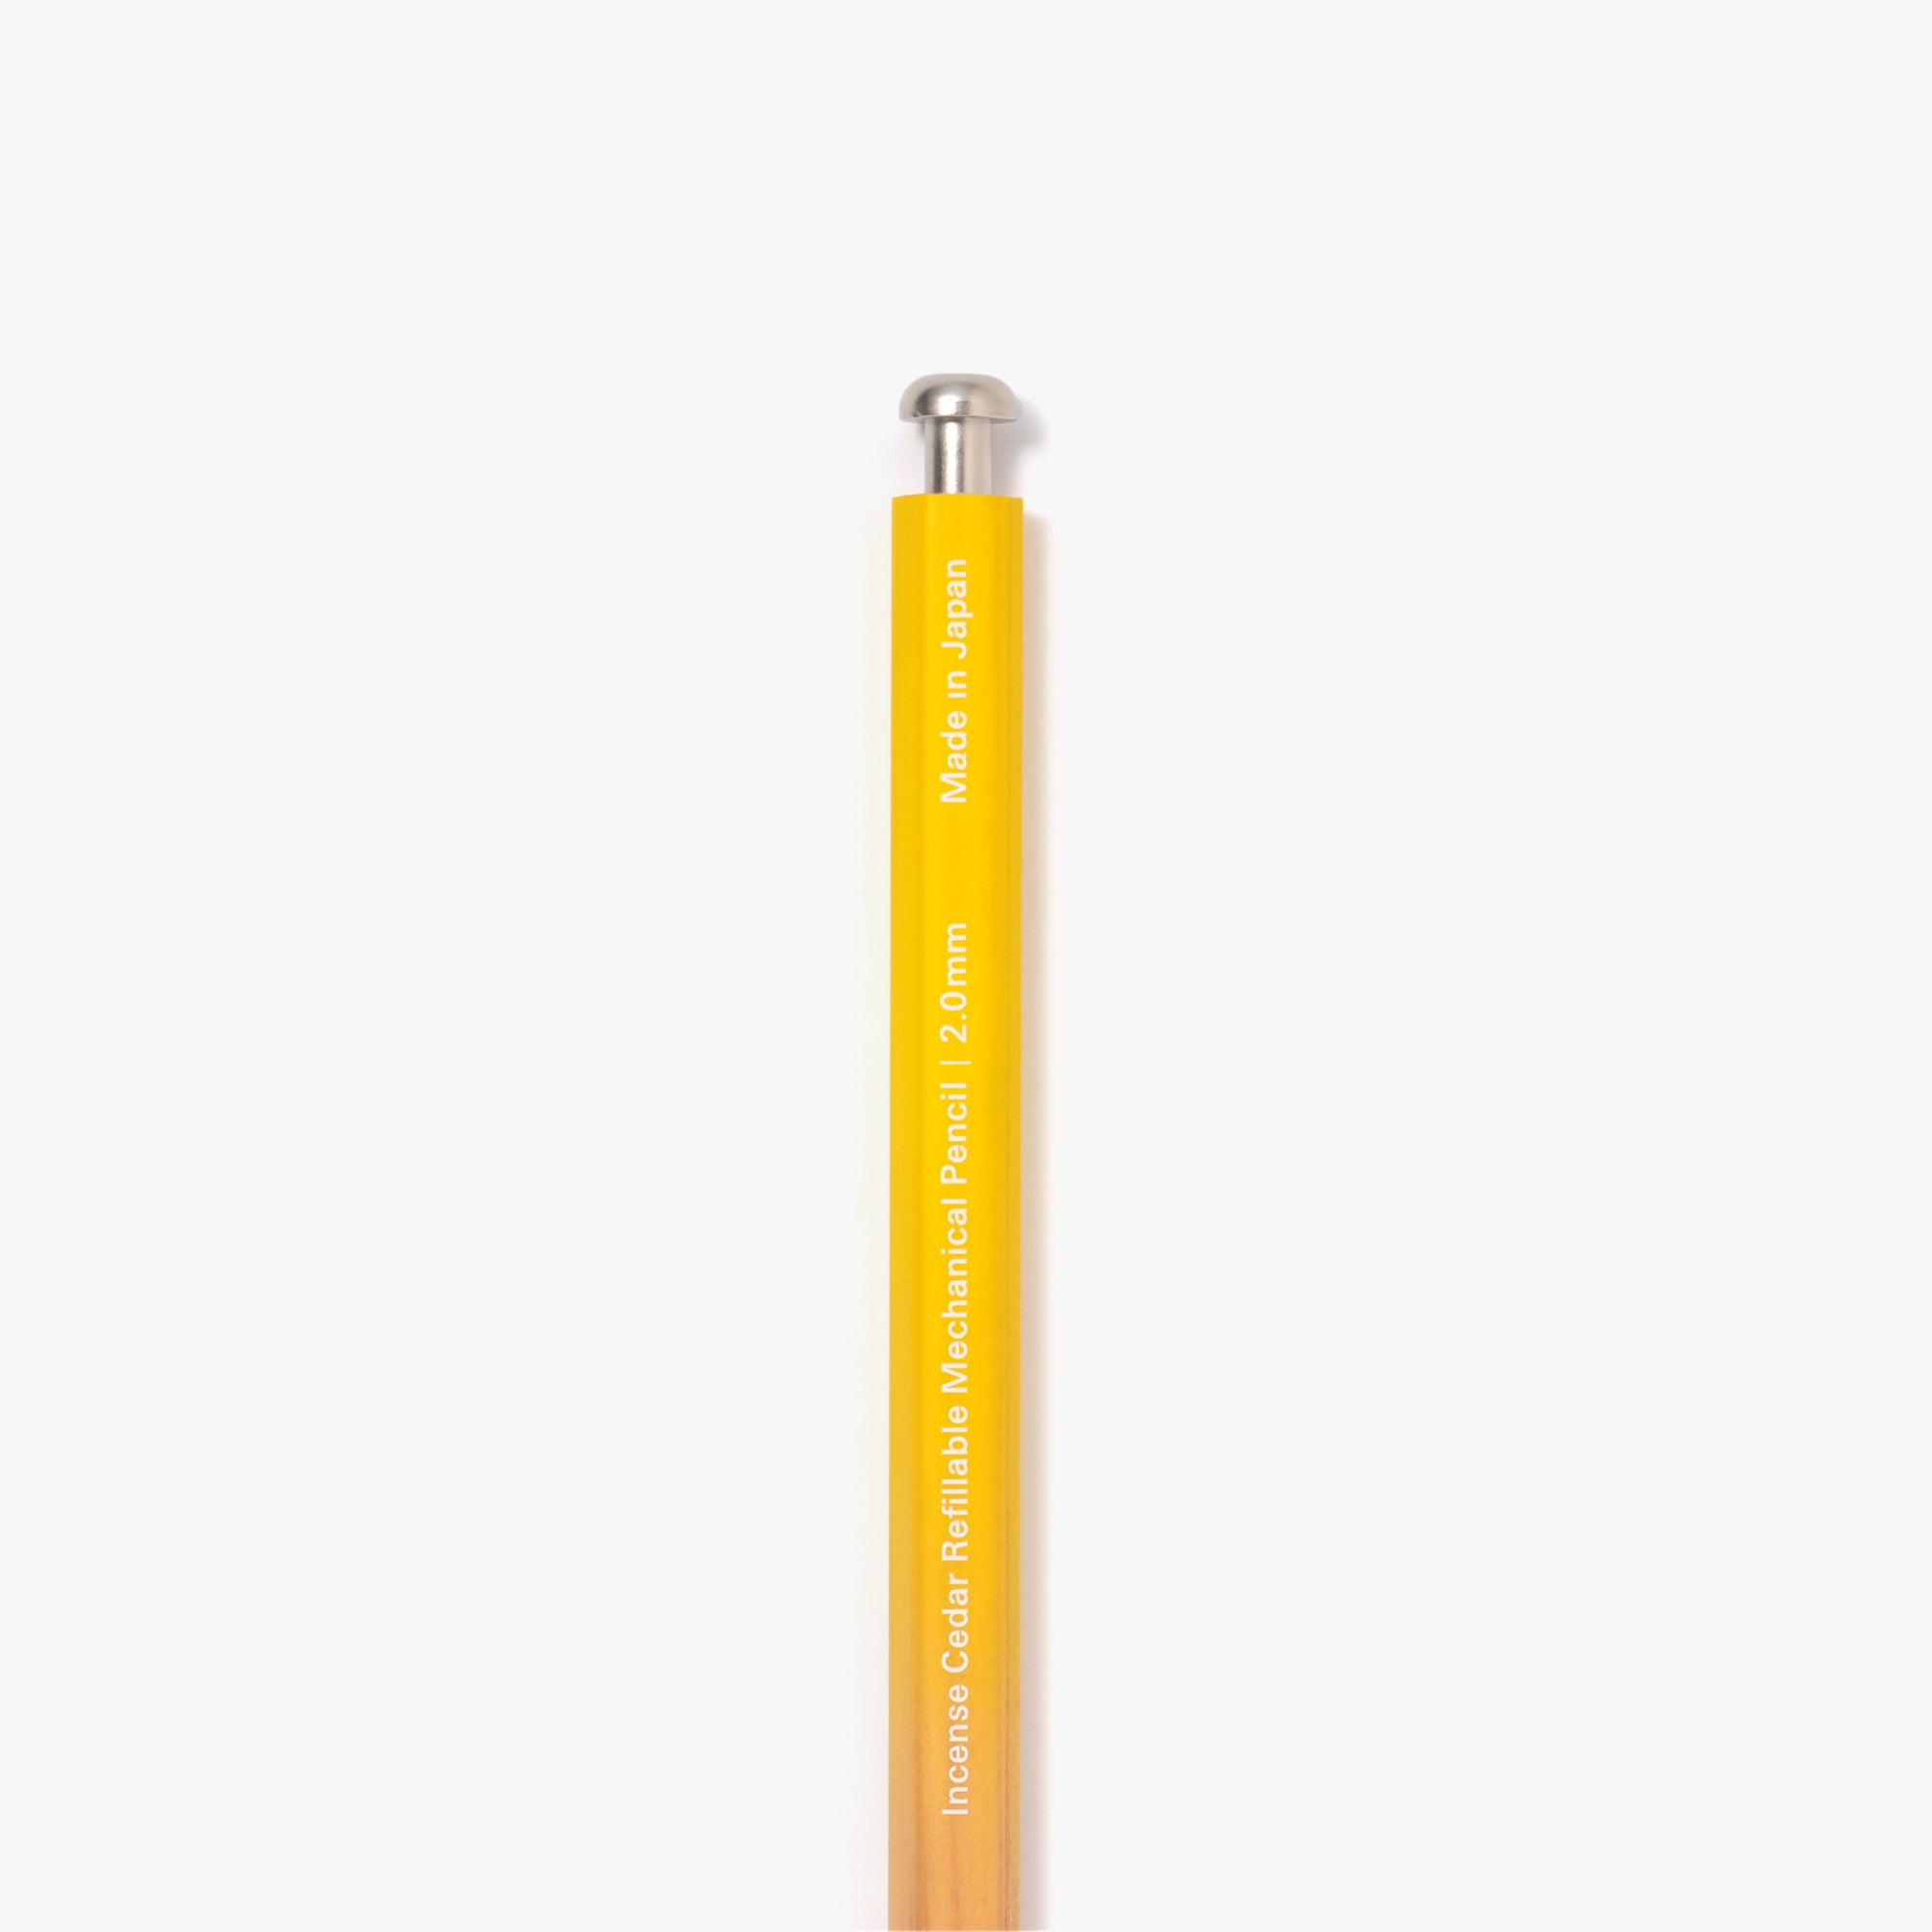 Elementary Pencil Set White